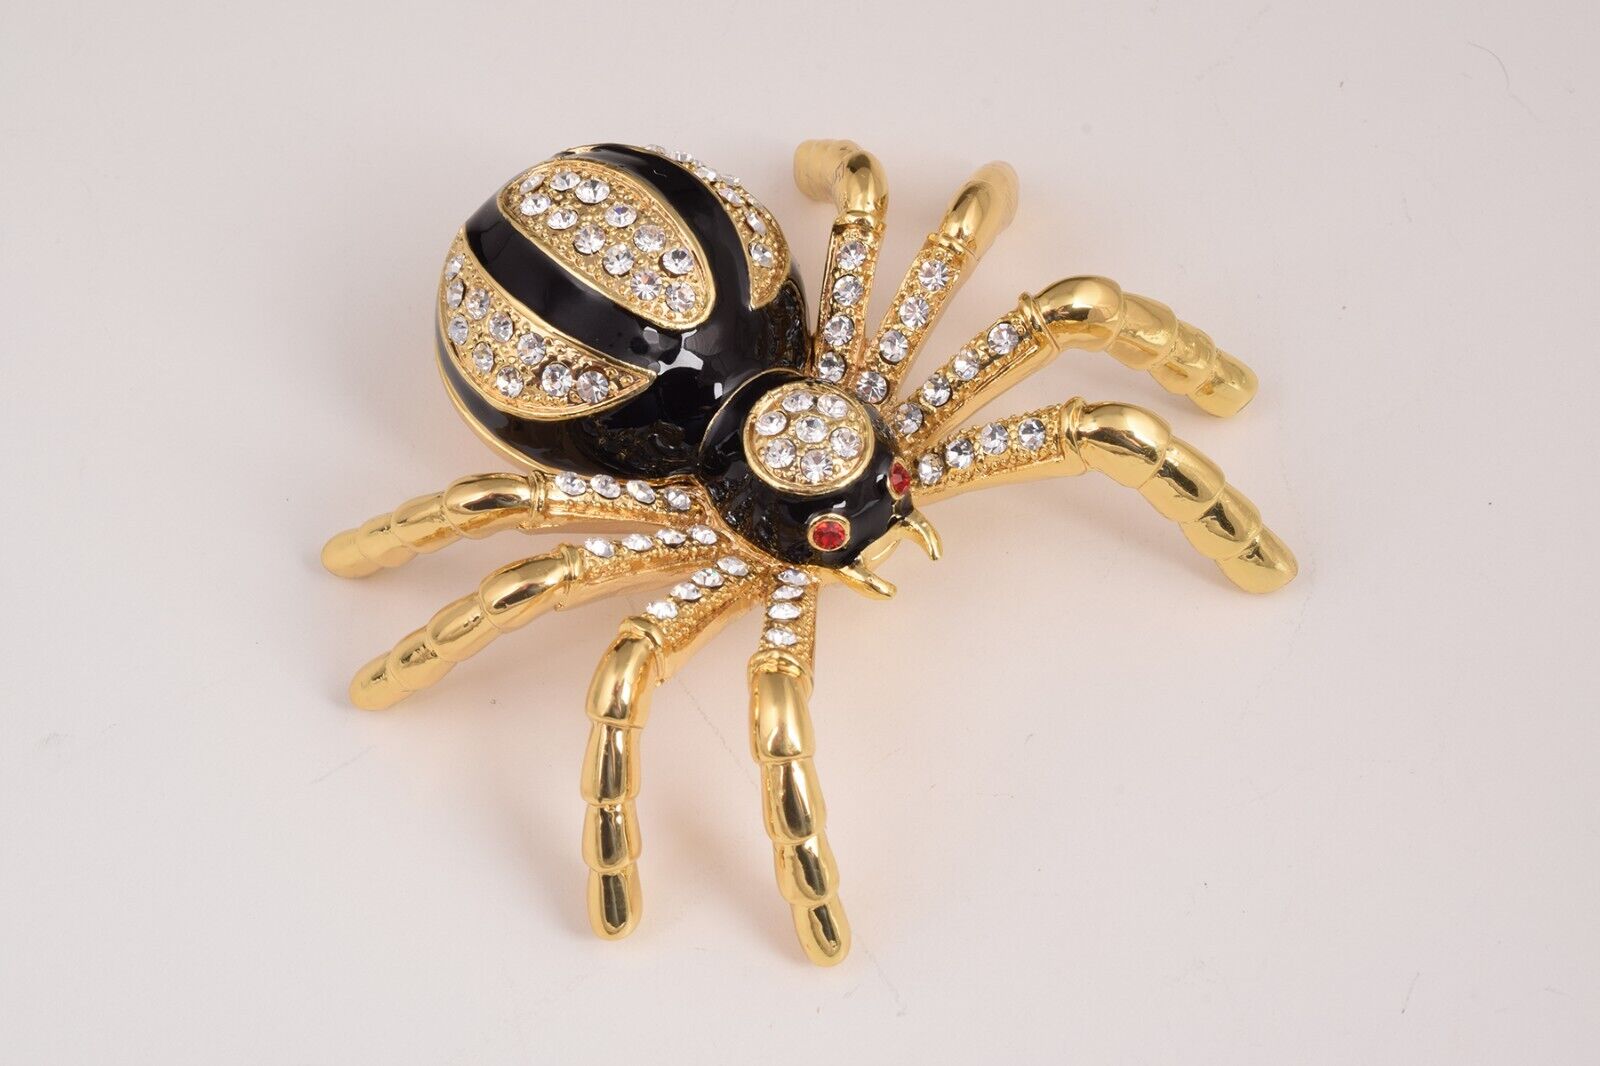 Keren Kopal Black Tarantula Spider Trinket Box Decorated with Austrian Crystals